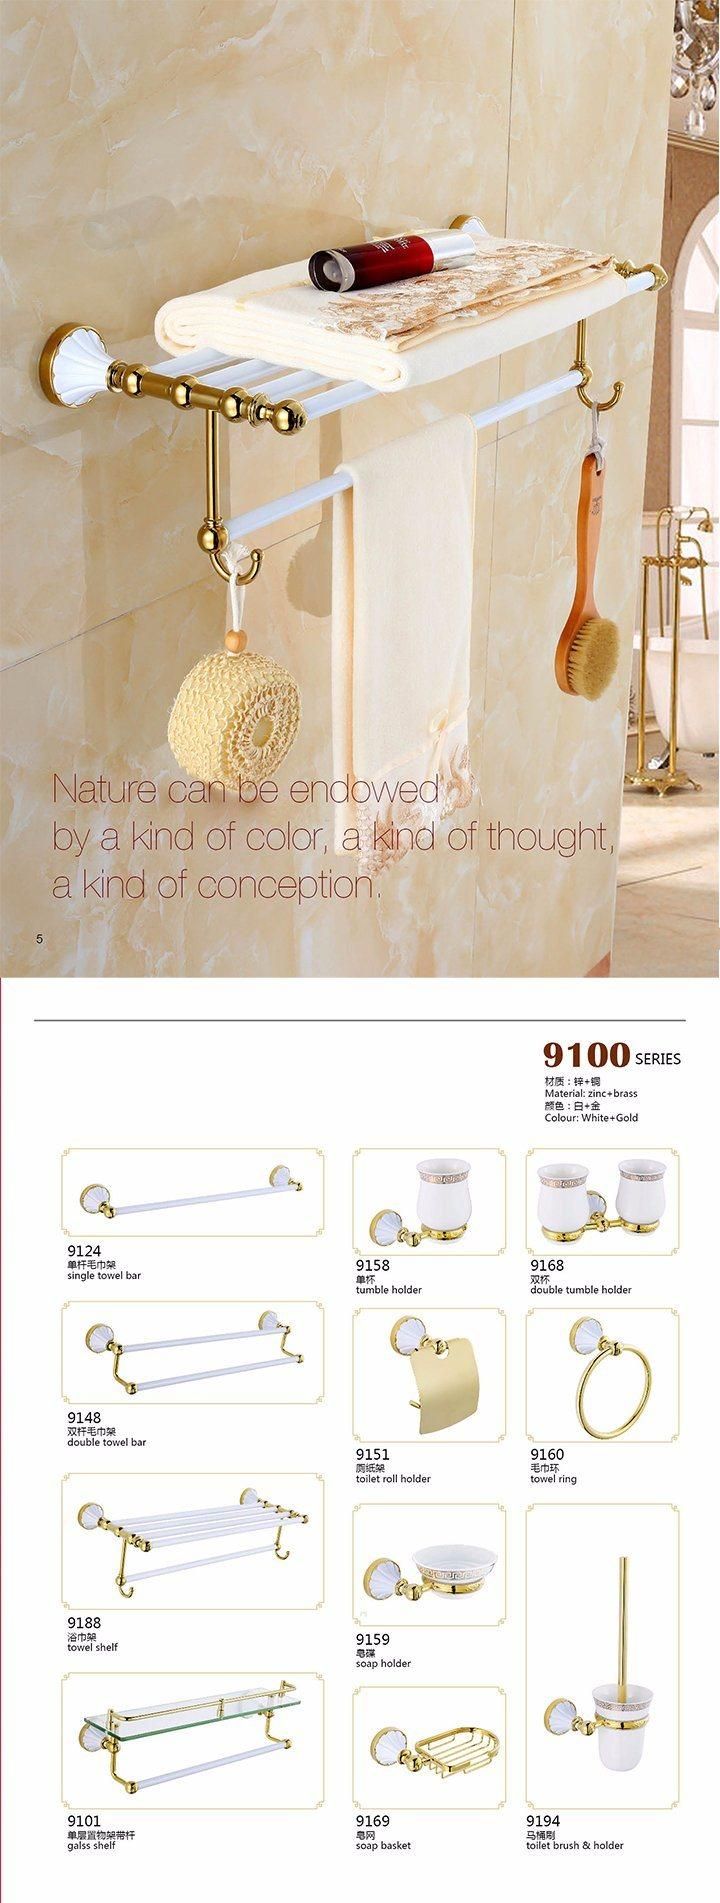 Best Price Bathroom Fitting & Accessories in Black Color 9200 Series